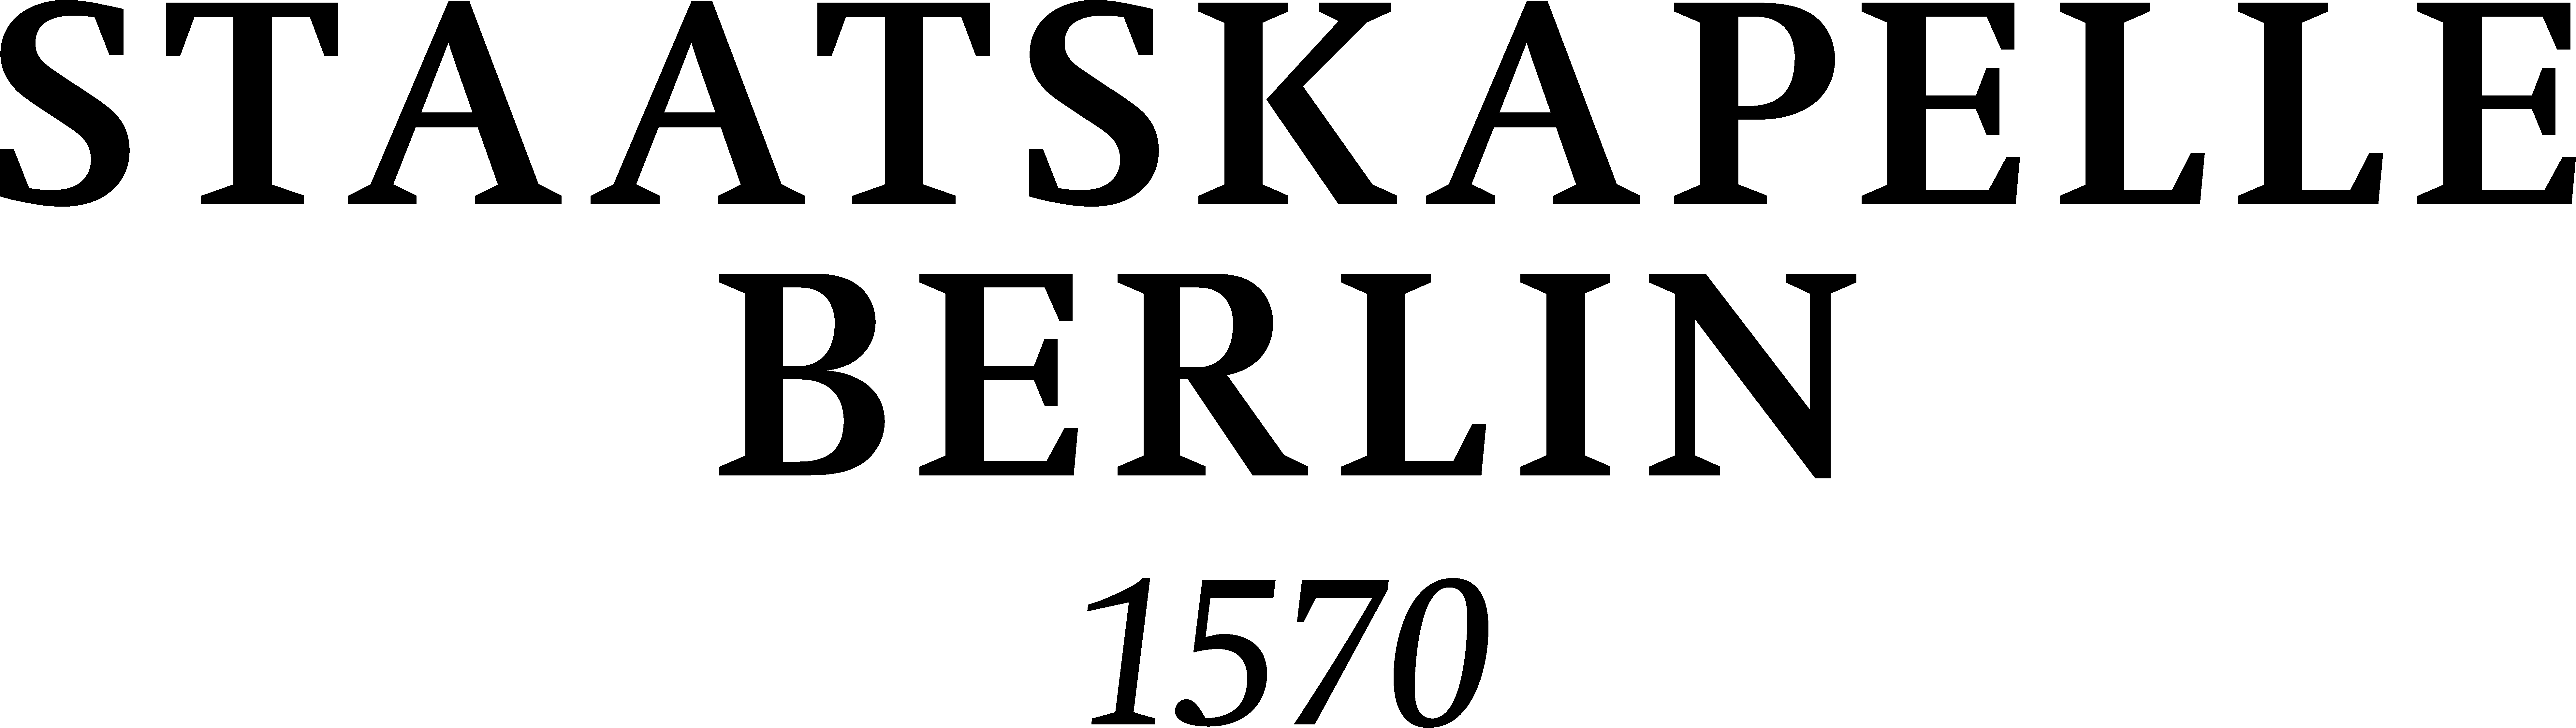 staatskapelle_logo2015_schwarz.png